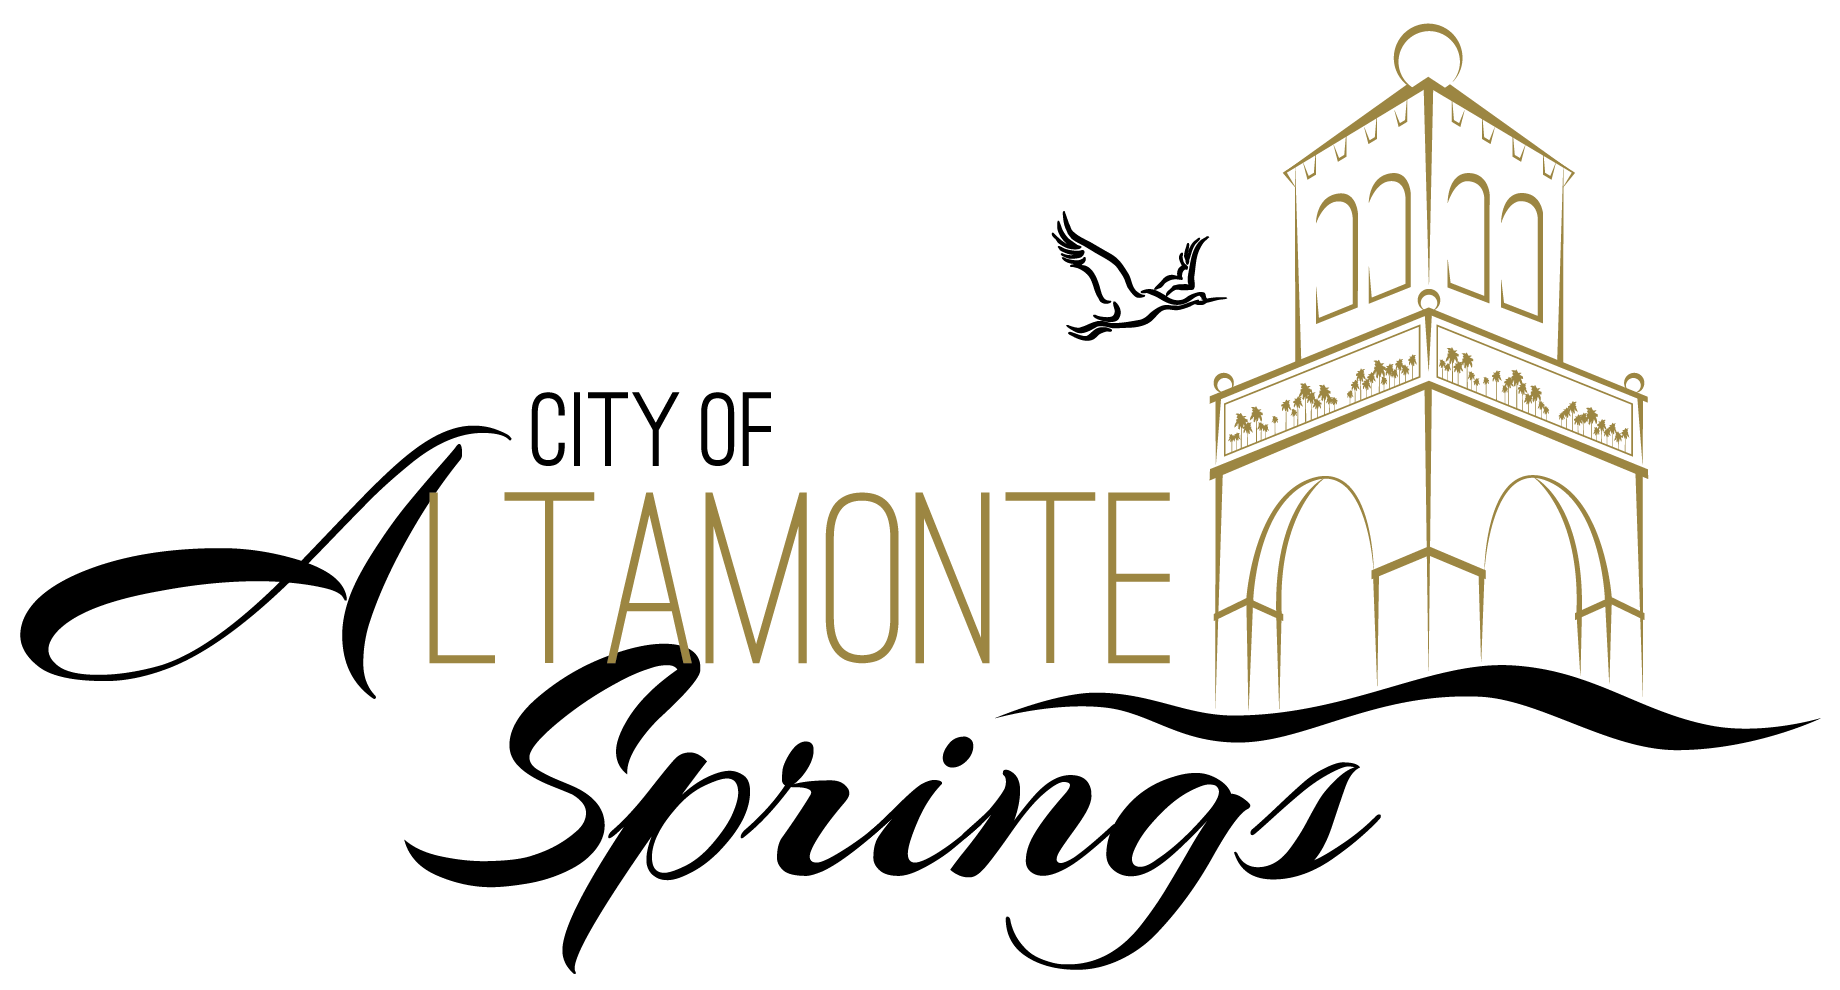 City of Altamonte Springs logo